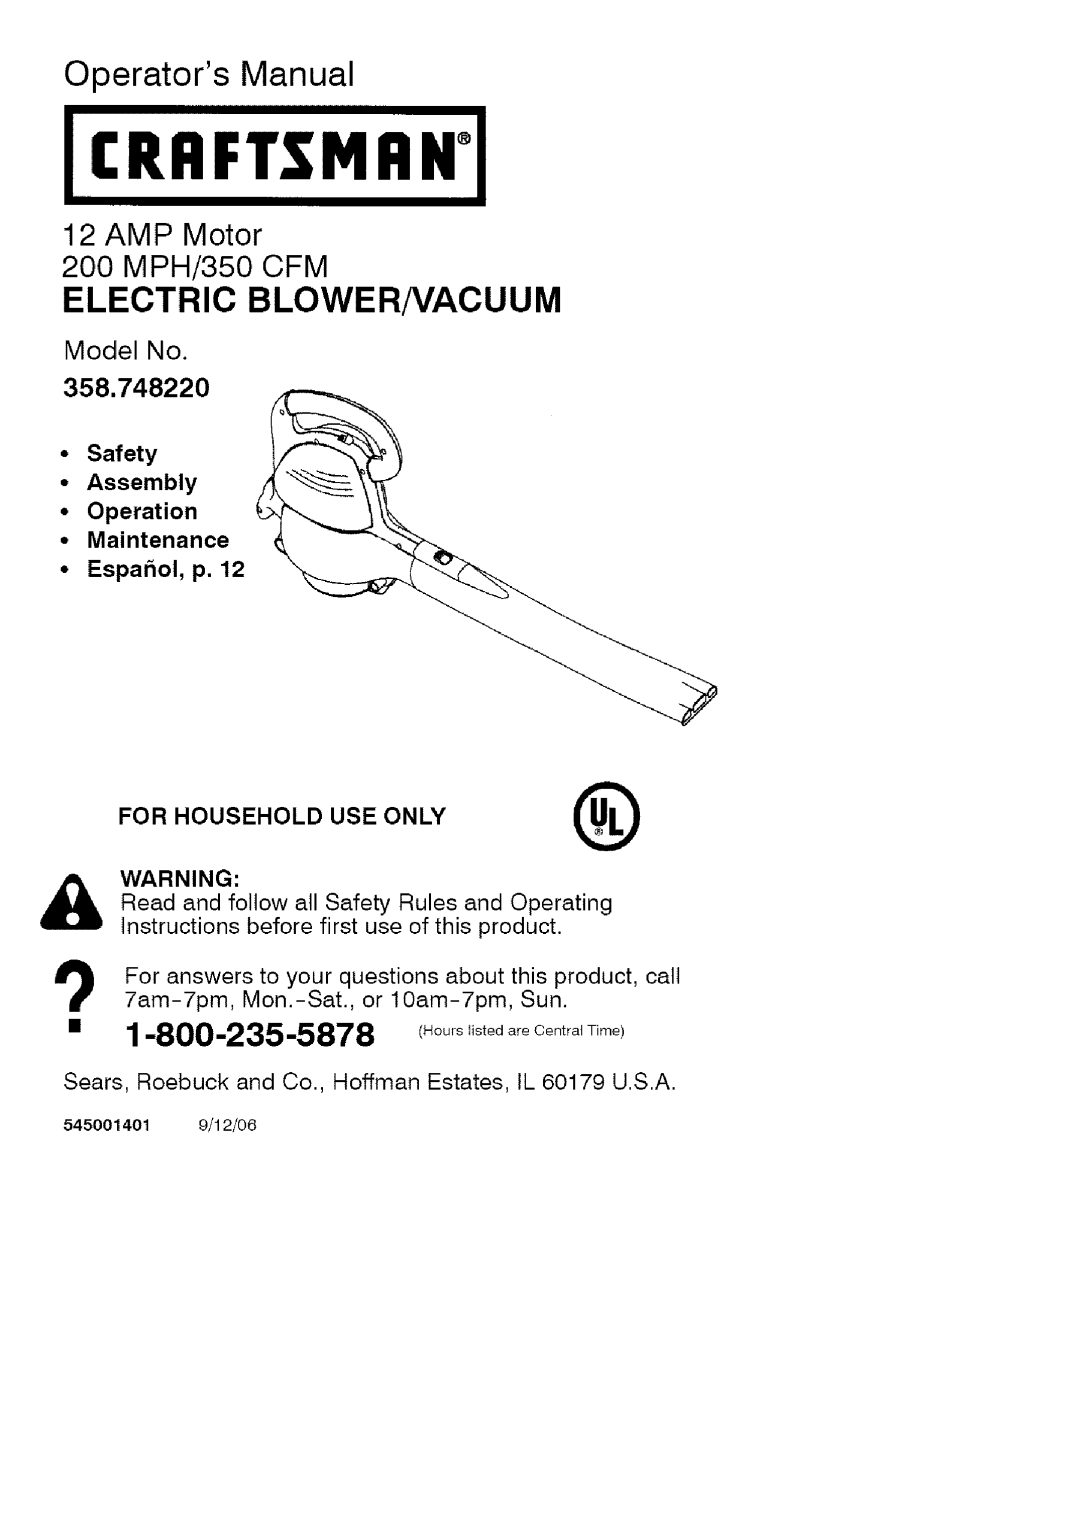 Craftsman manual I CRRFTglVlRNI, Operators Manual, Electric Blowernacuum, Model No, 358.748220, •Safety •Assembly 